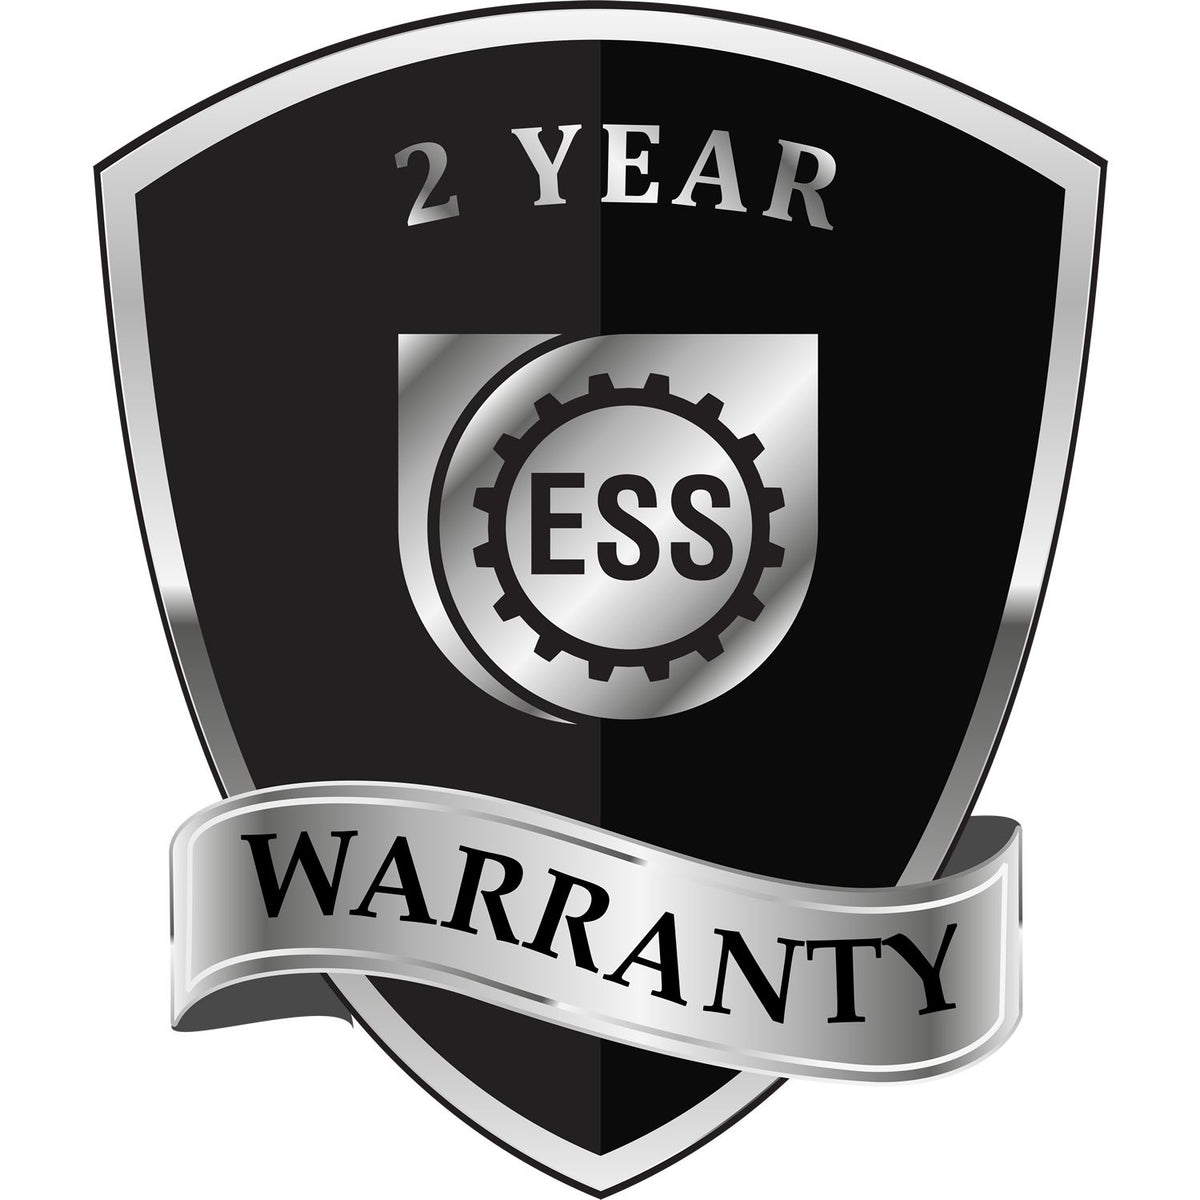 A black and silver badge or emblem showing warranty information for the Hybrid West Virginia Landscape Architect Seal